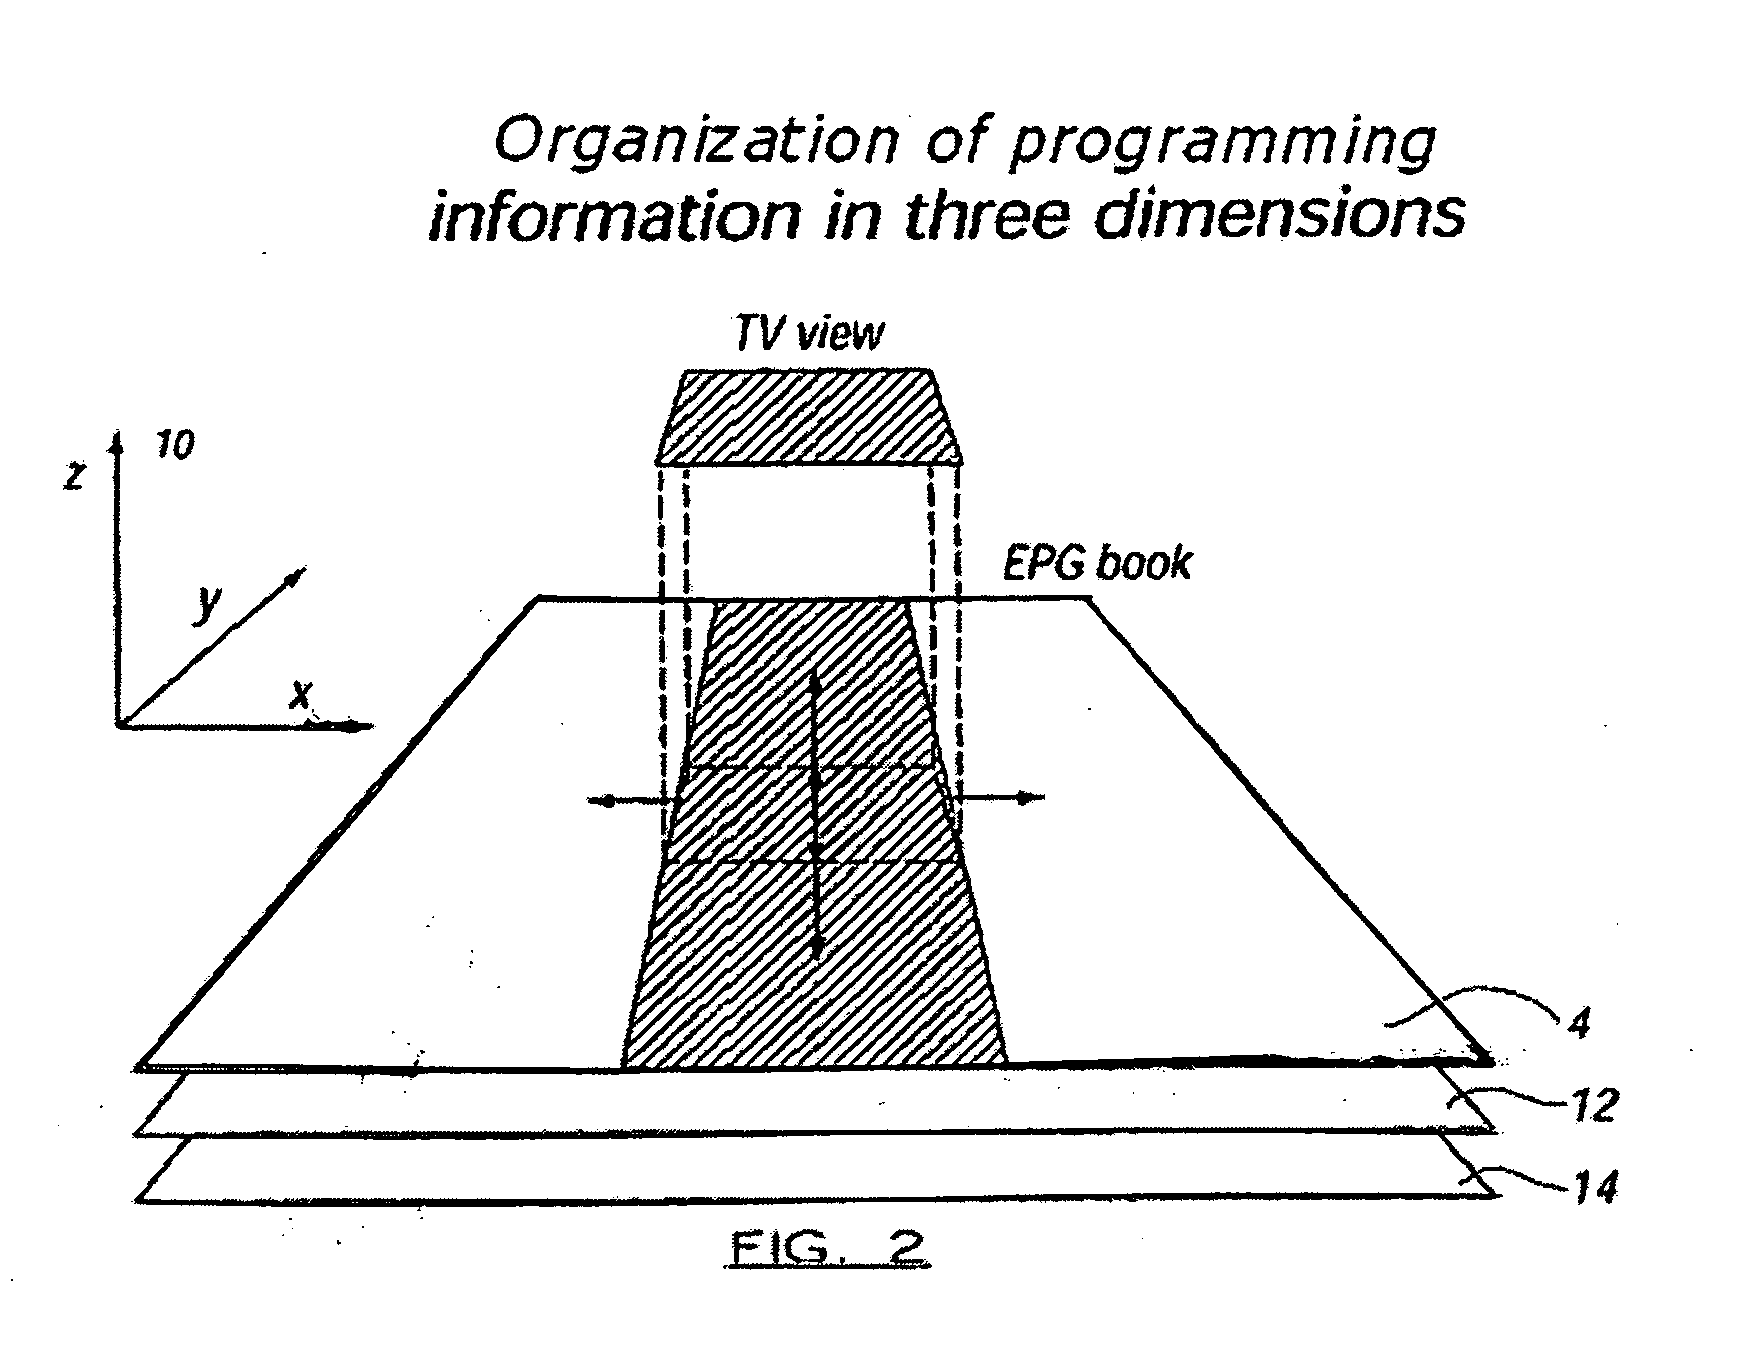 Representation of EPG programming information